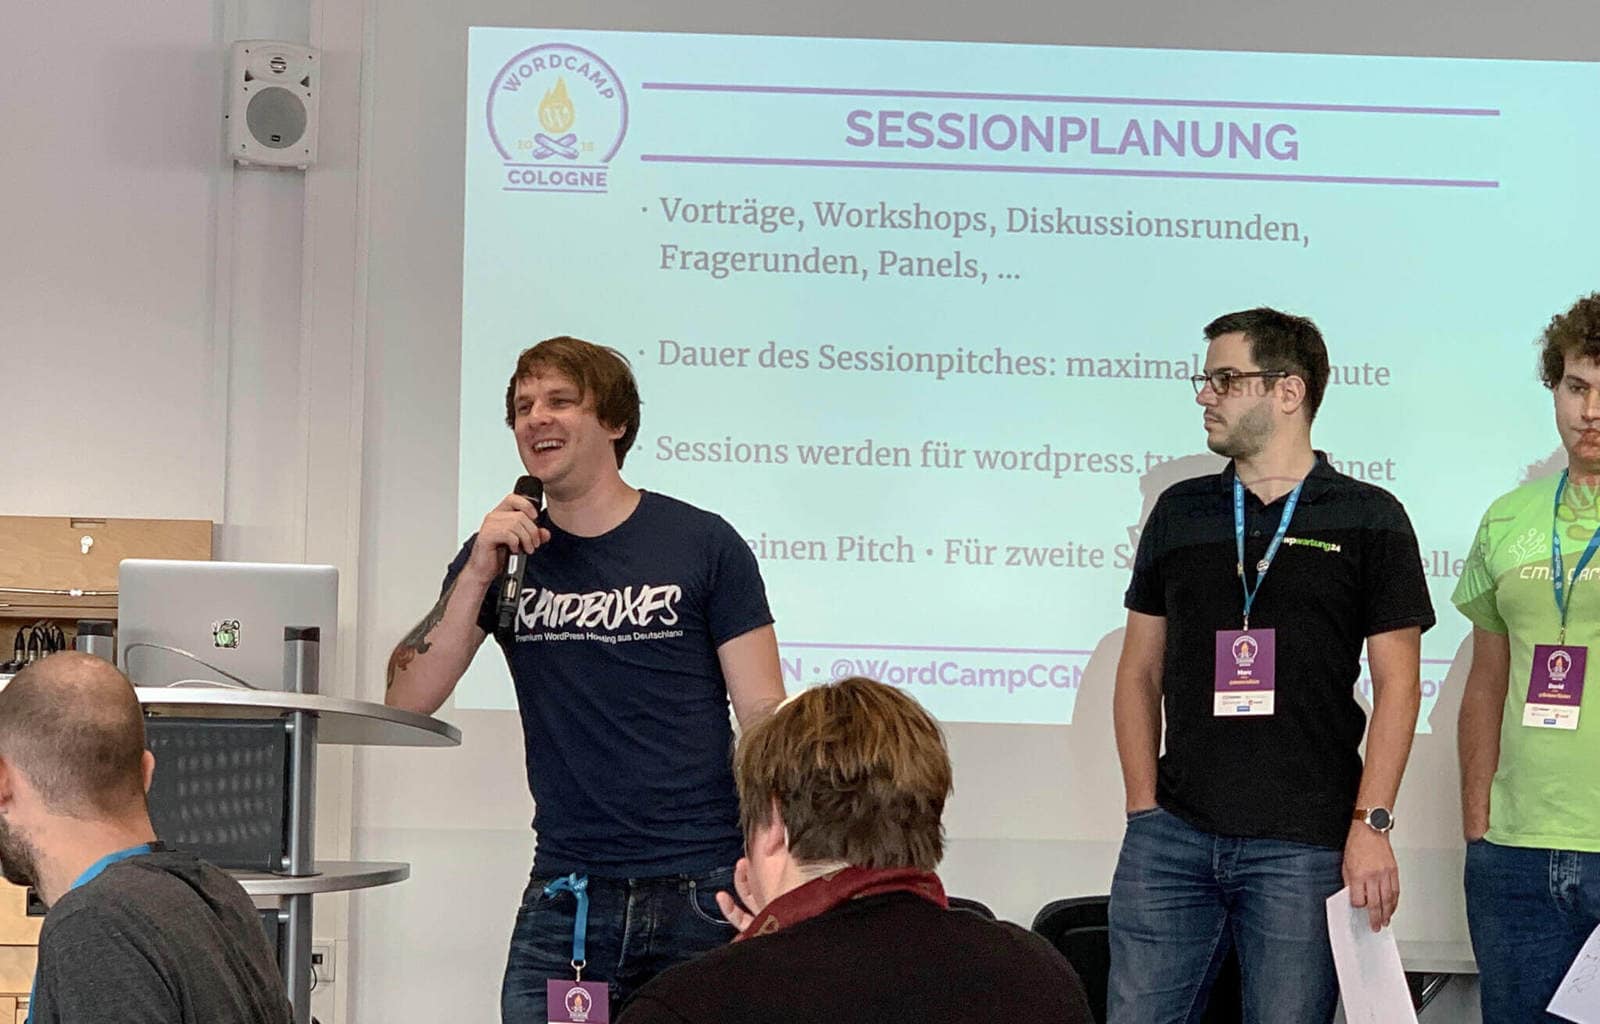 WordCamp Cologne: Matthias von Raidboxes at the session pitch